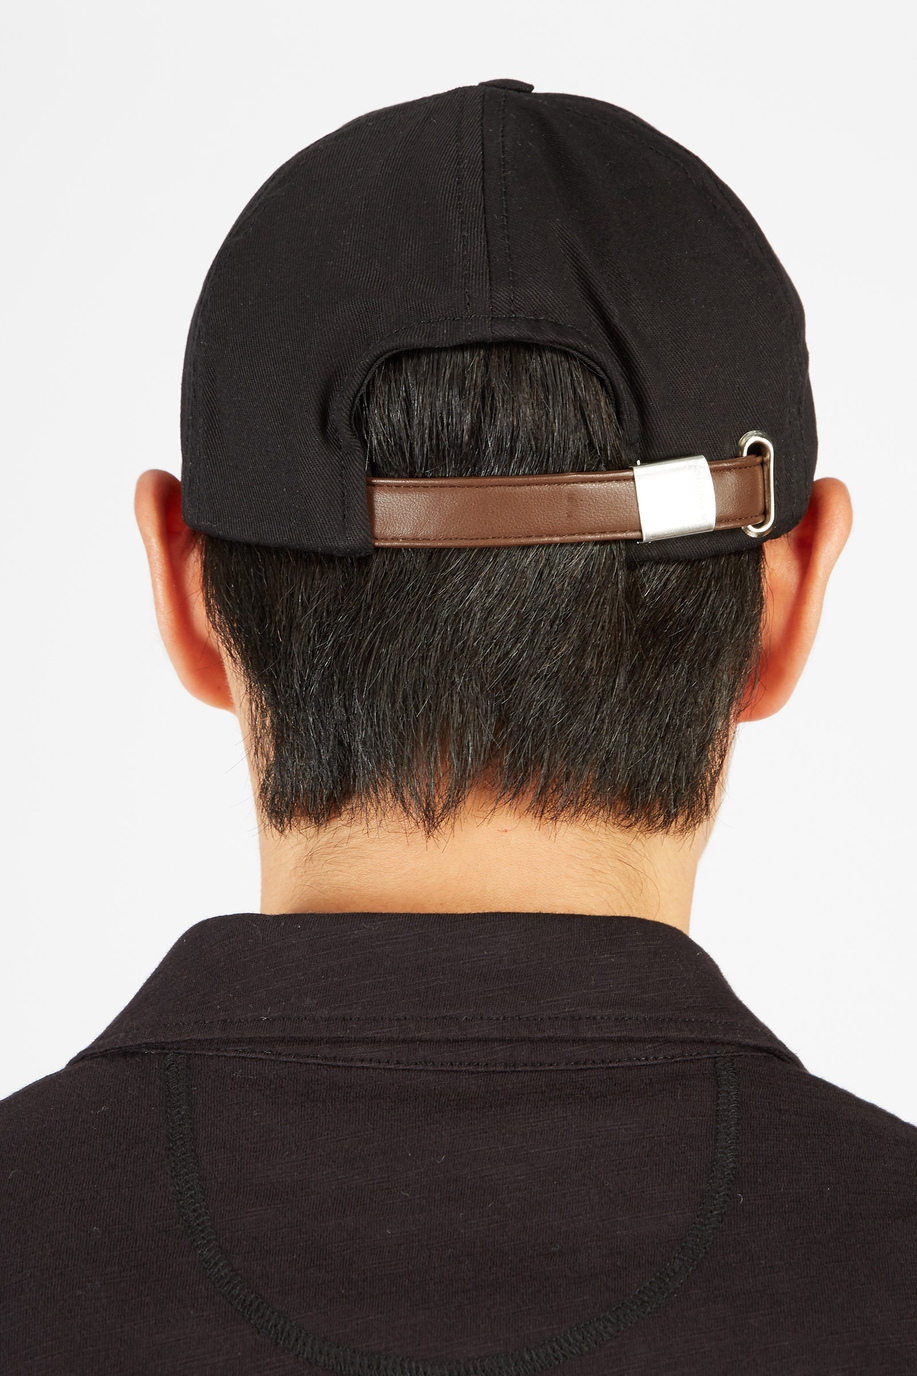 Unisex baseball cap with adjustable regular fit closure - Accessories | La Martina - Official Online Shop